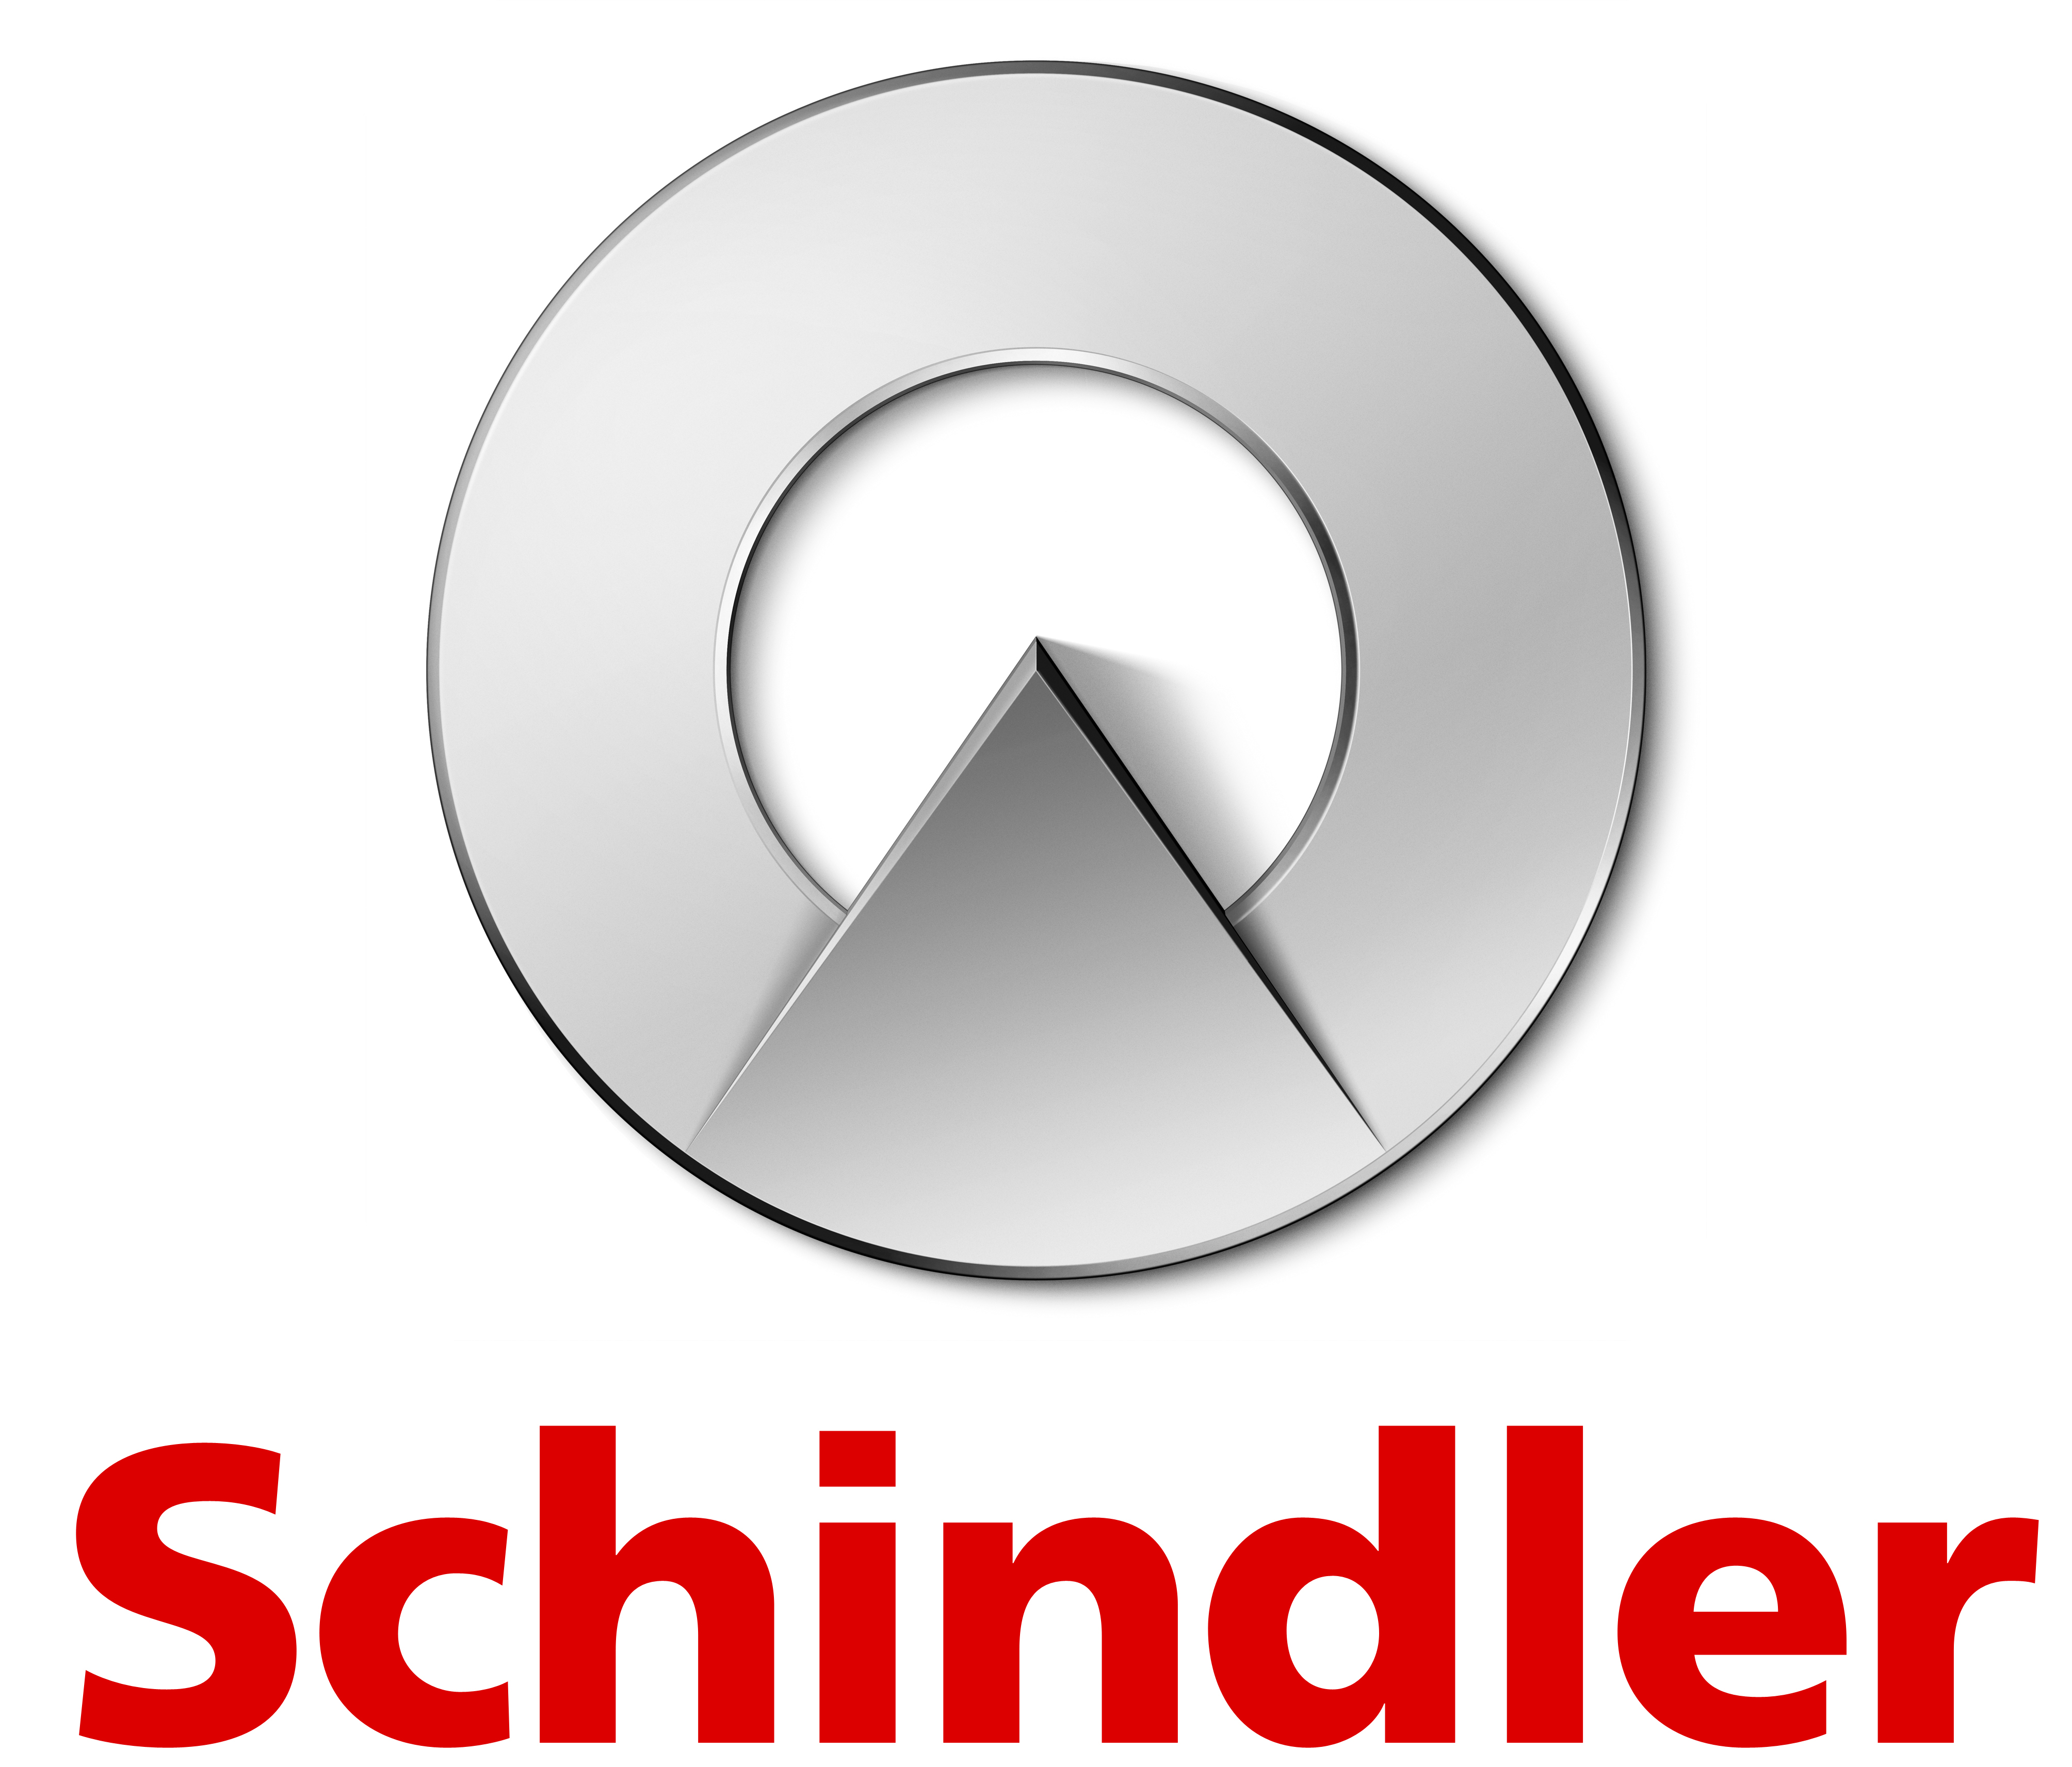 Schindler Elevator Corporation